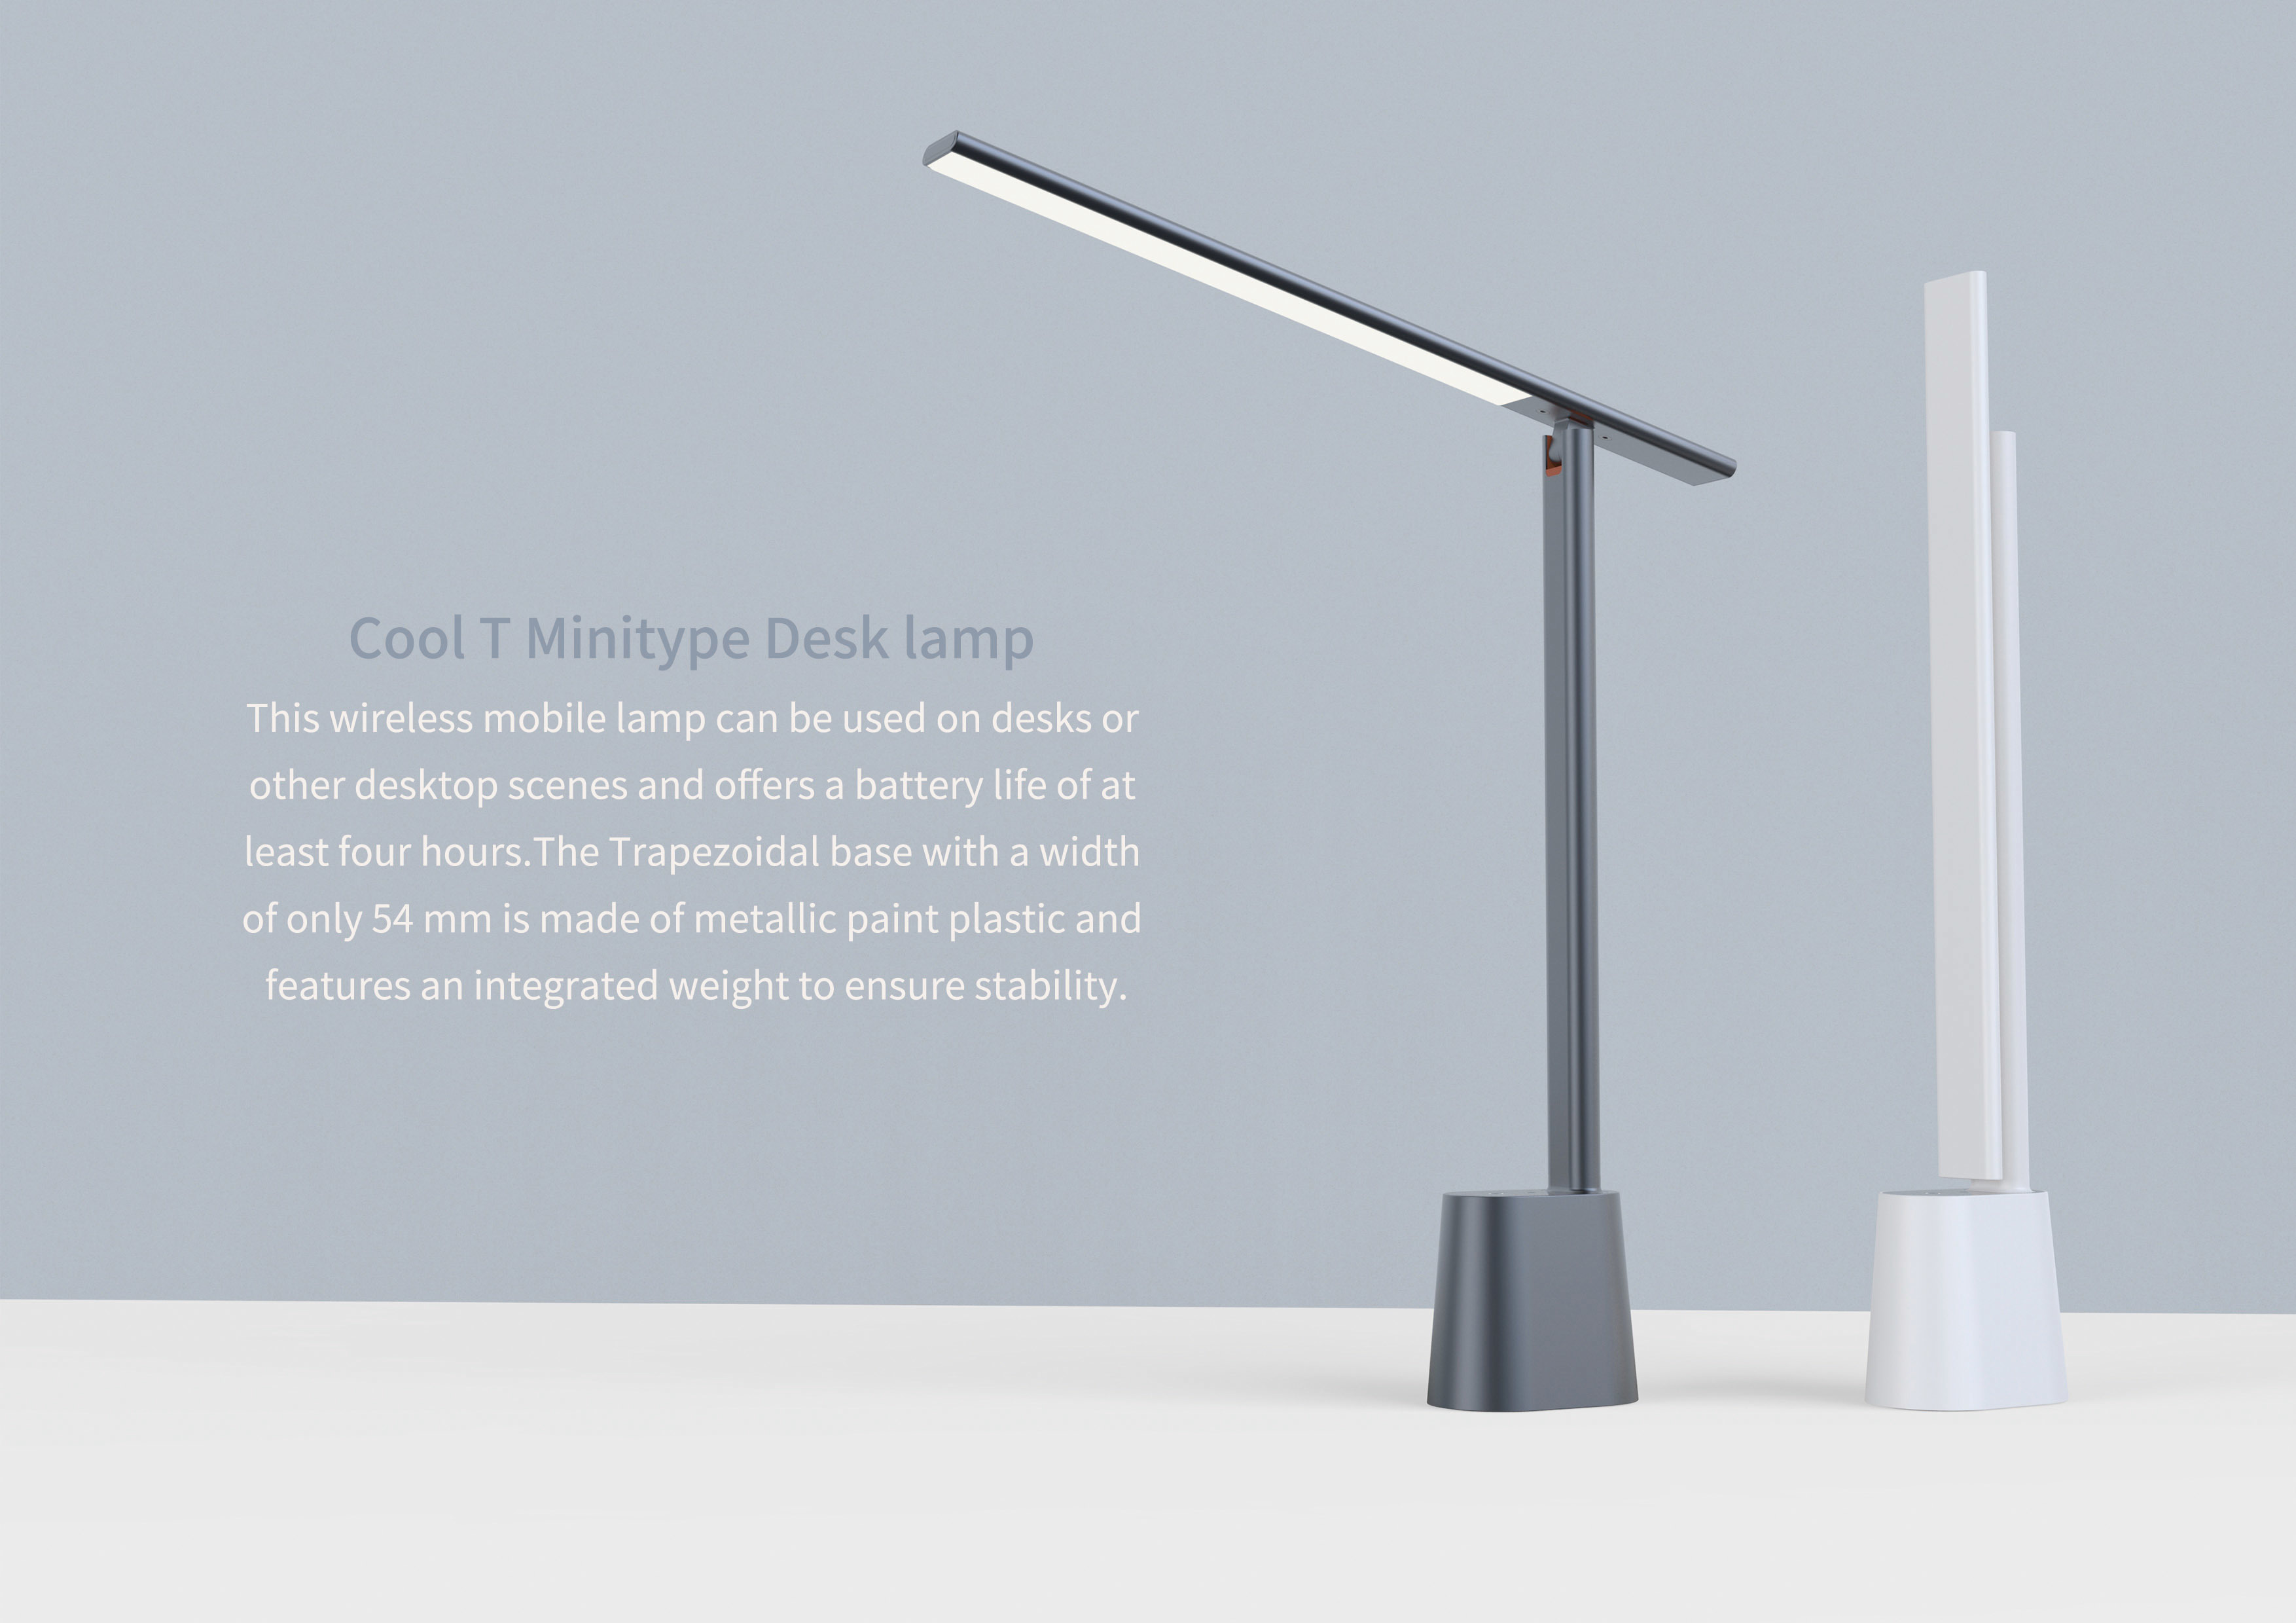 Cool T Minitype Desk lamp